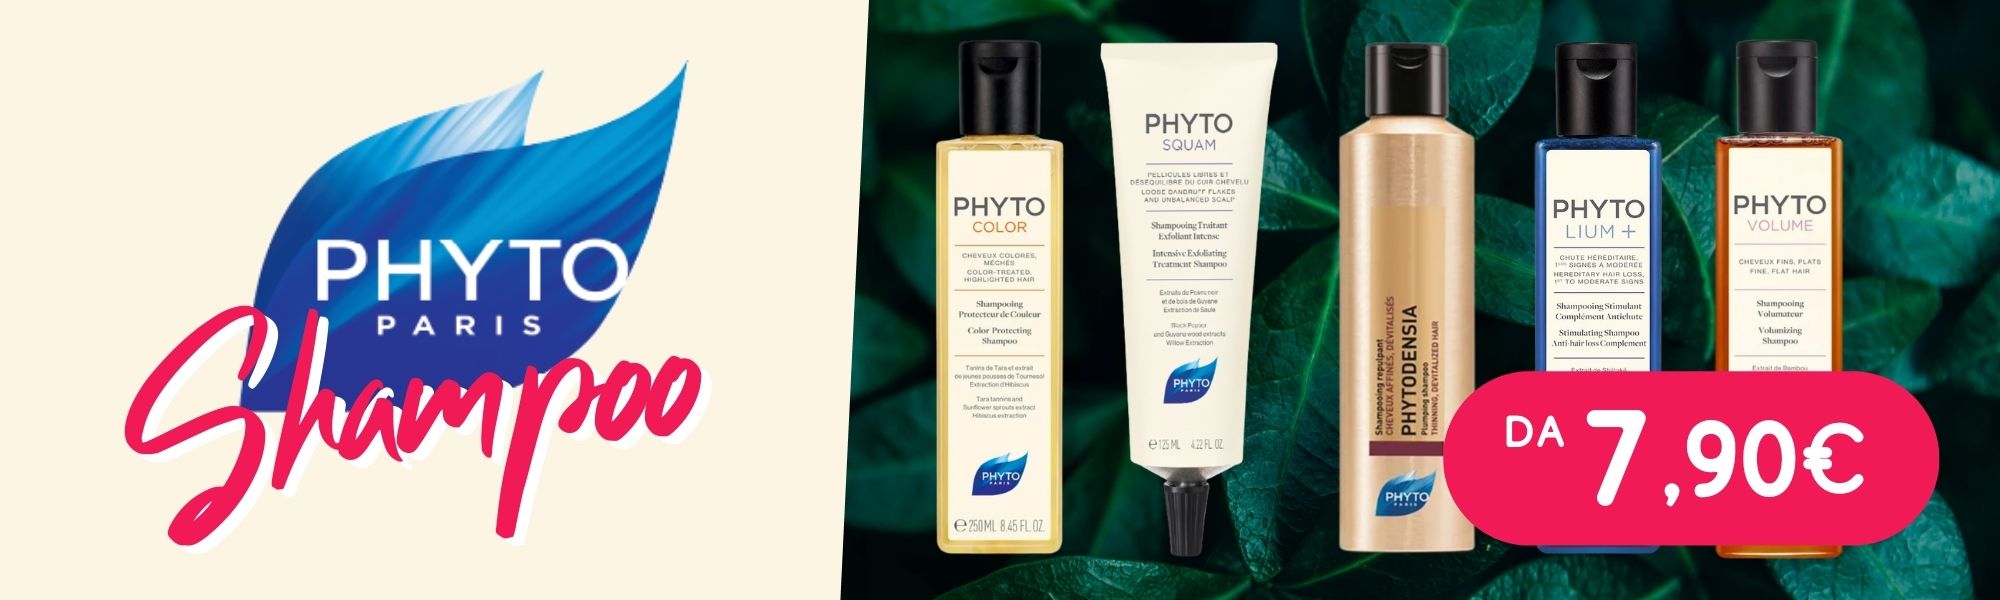 Offerta Phyto Shampoo